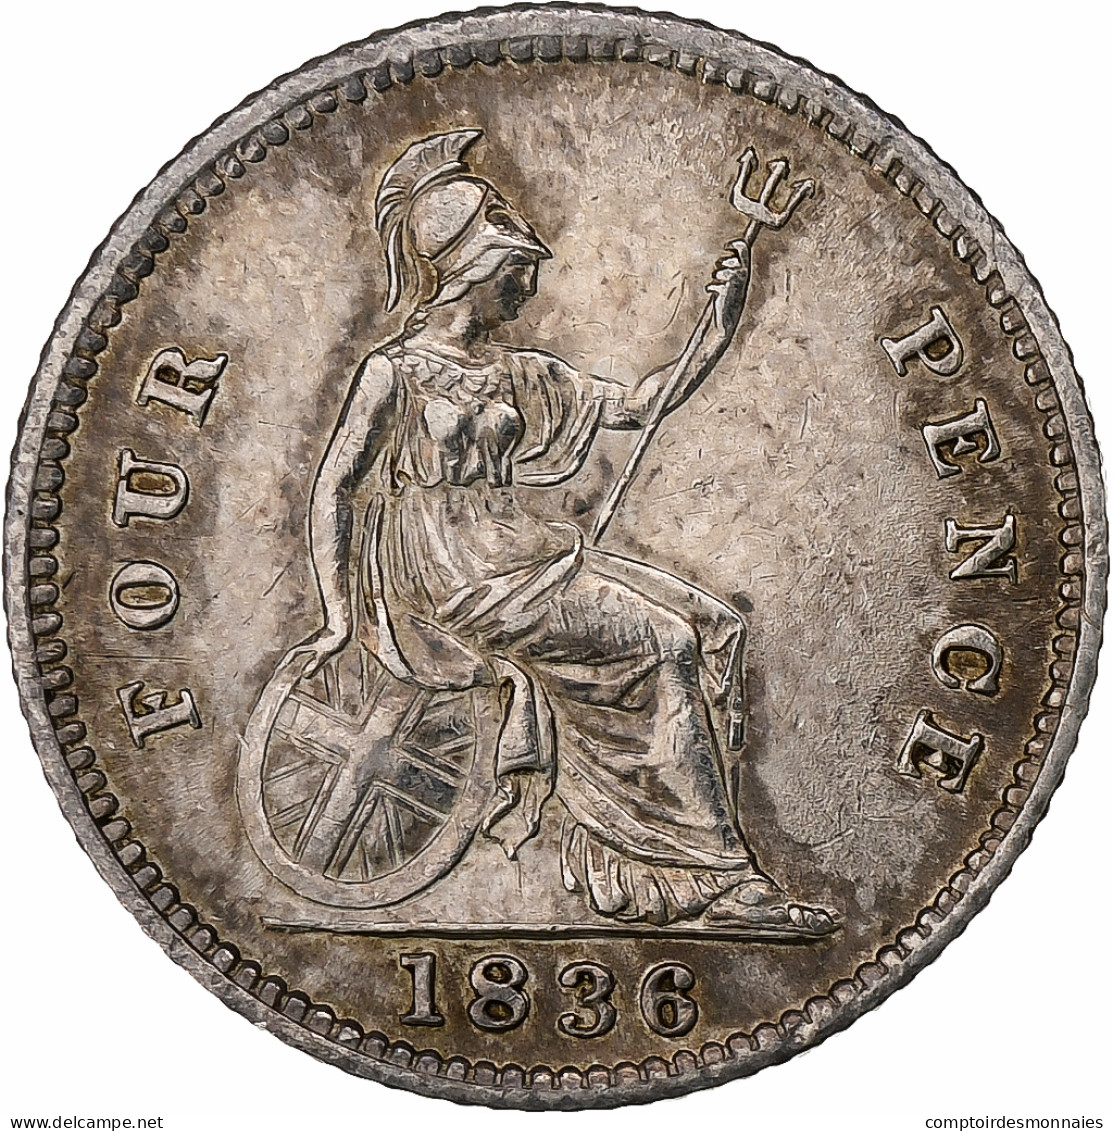 Royaume-Uni, William IV, 4 Pence, 1836, Londres, Argent, TTB+, Spink:3837 - G. 4 Pence/ Groat